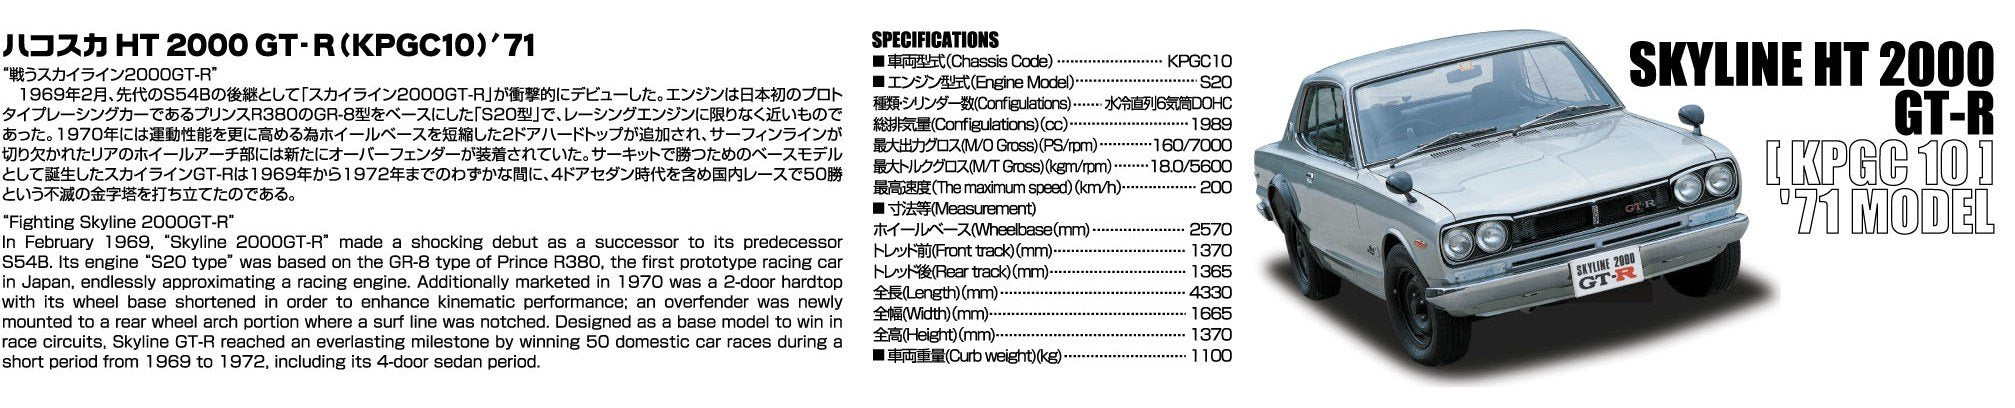 AOSHIMA 41697 Nissan Skyline 2000 Gt-R 1970 Kpgc10 Bausatz im Maßstab 1:24